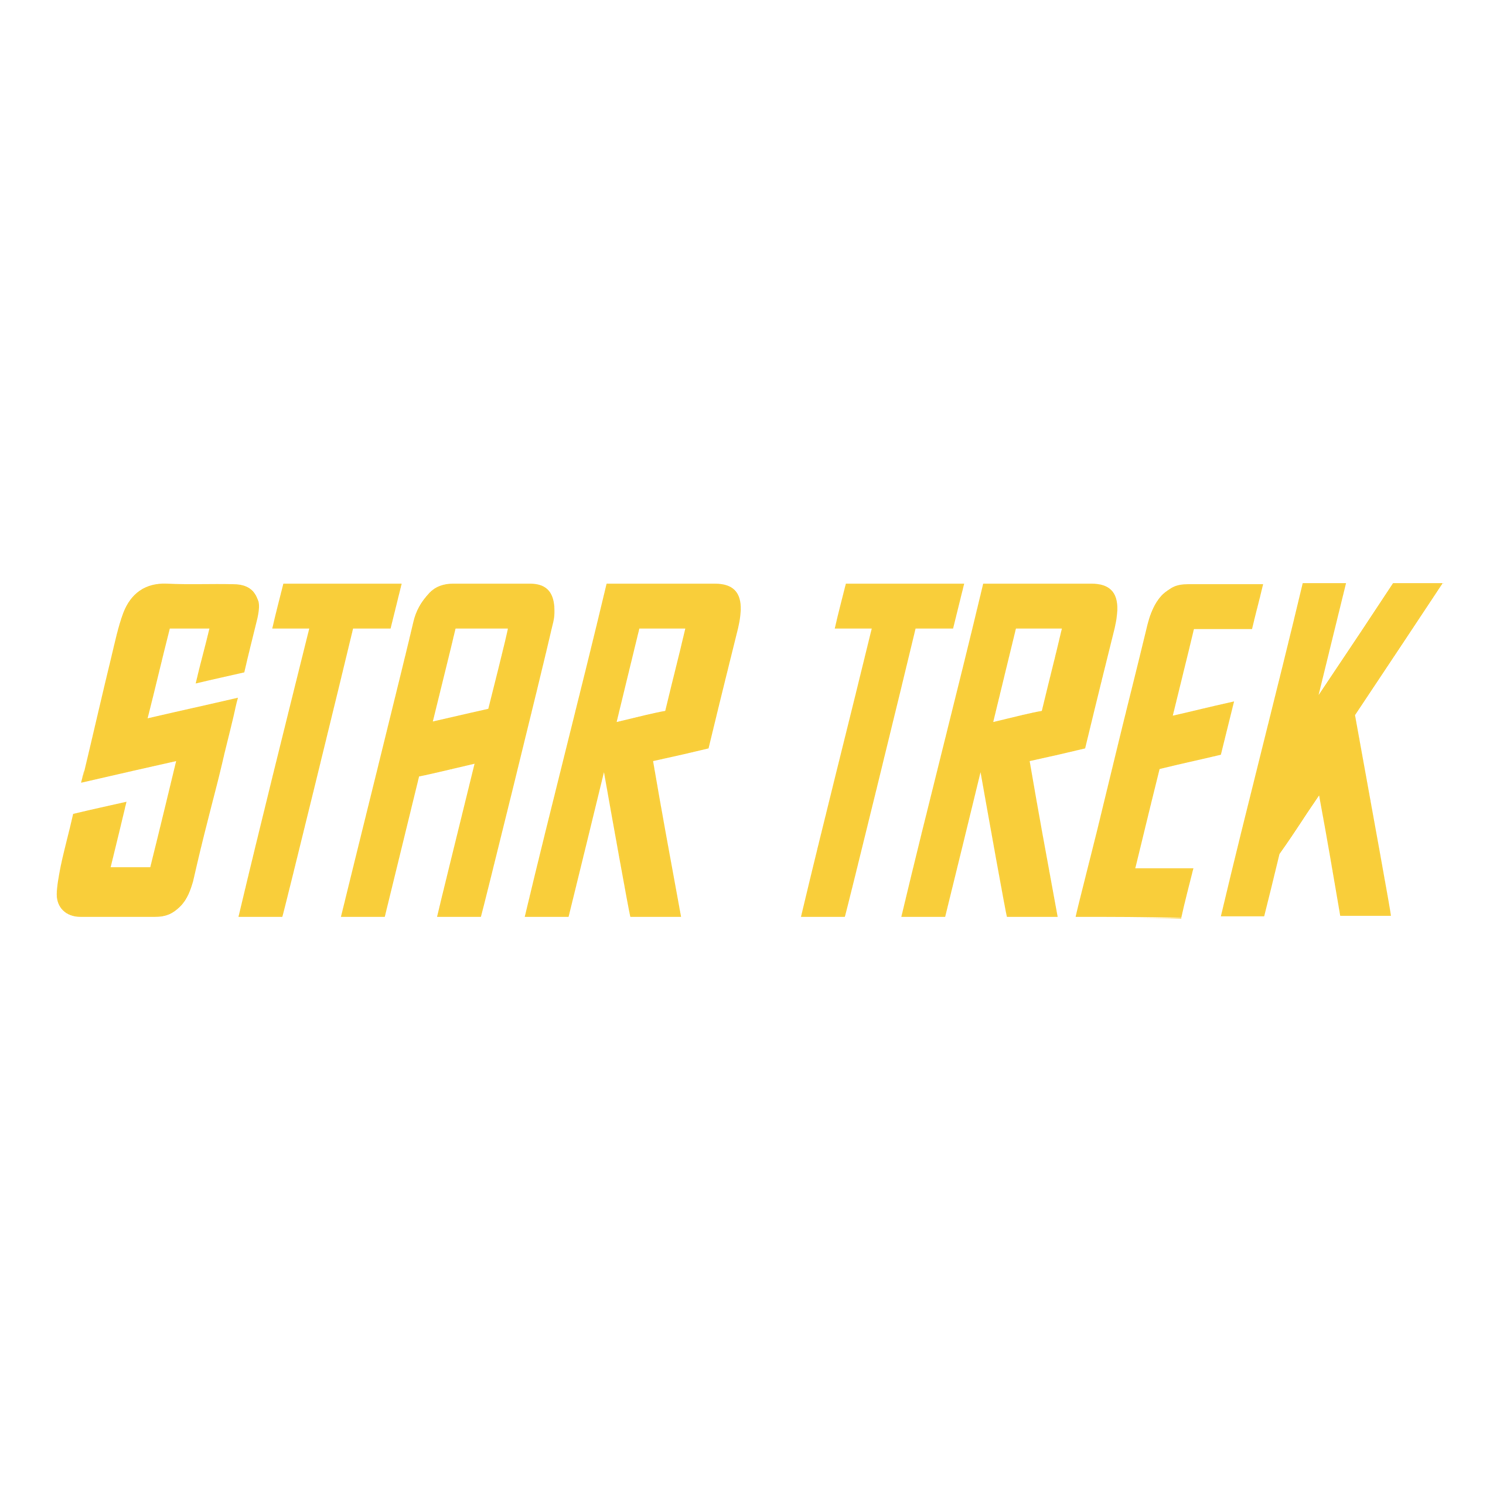 star trek logo png